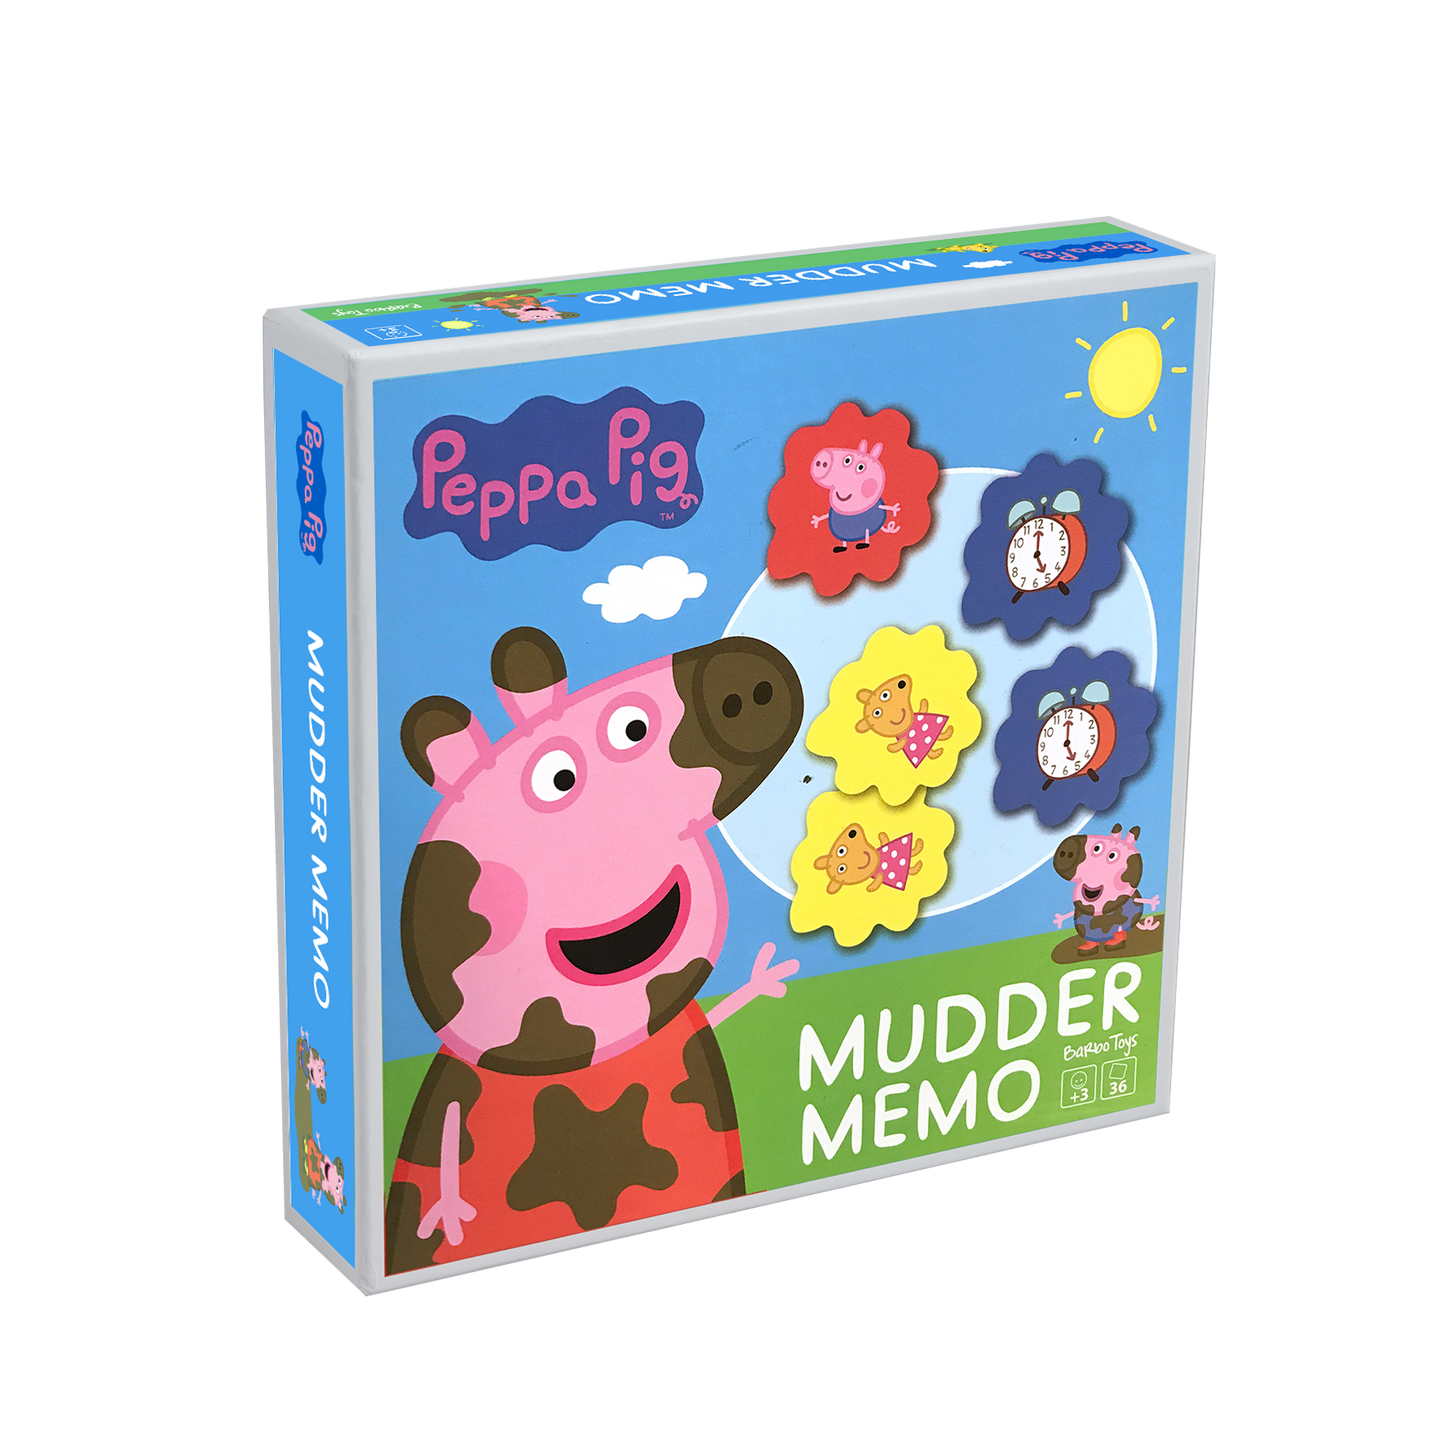 Peppa Pig - Square Games - Mud Memo